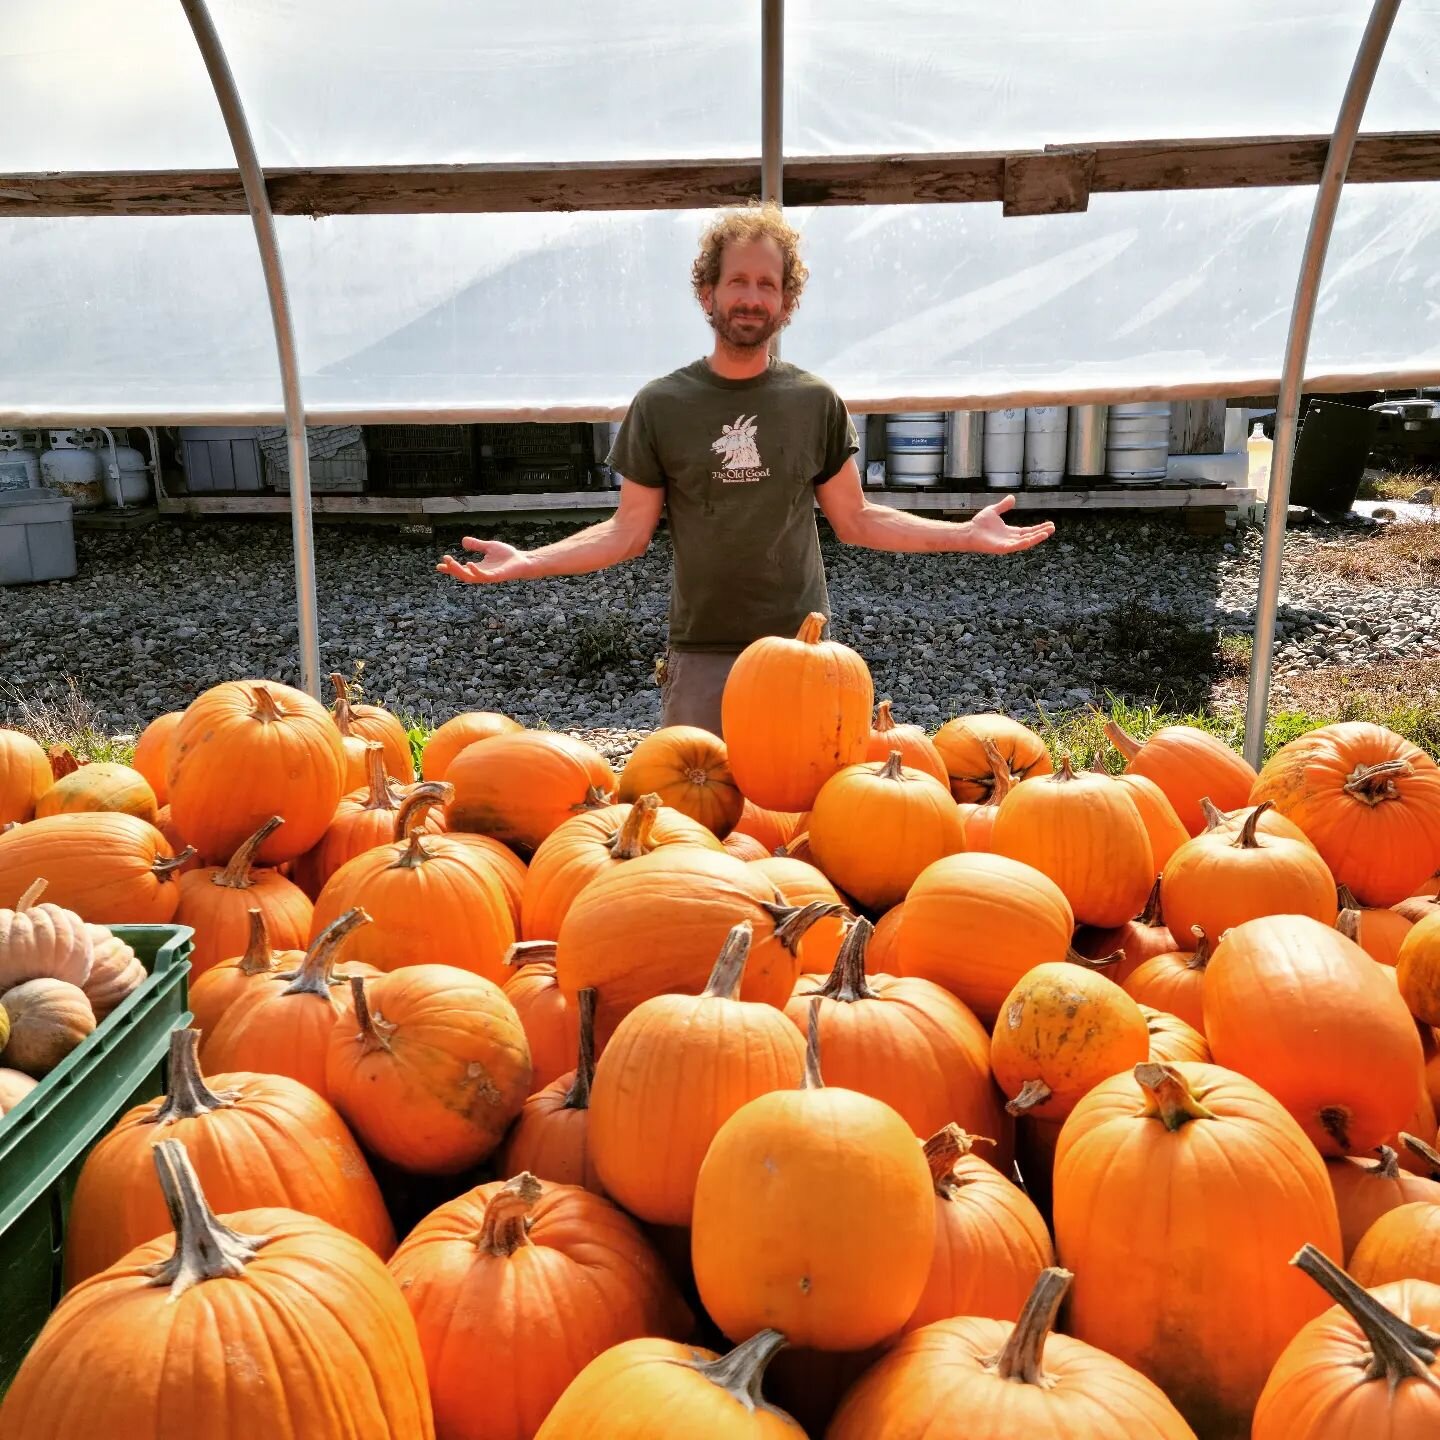 Pumpkins, pumpkins, pumpkins.  Get your pumpkin from this guy.

#fall #autumn #Halloween #jackolantern #timetocarve #favoriteseason #abundance